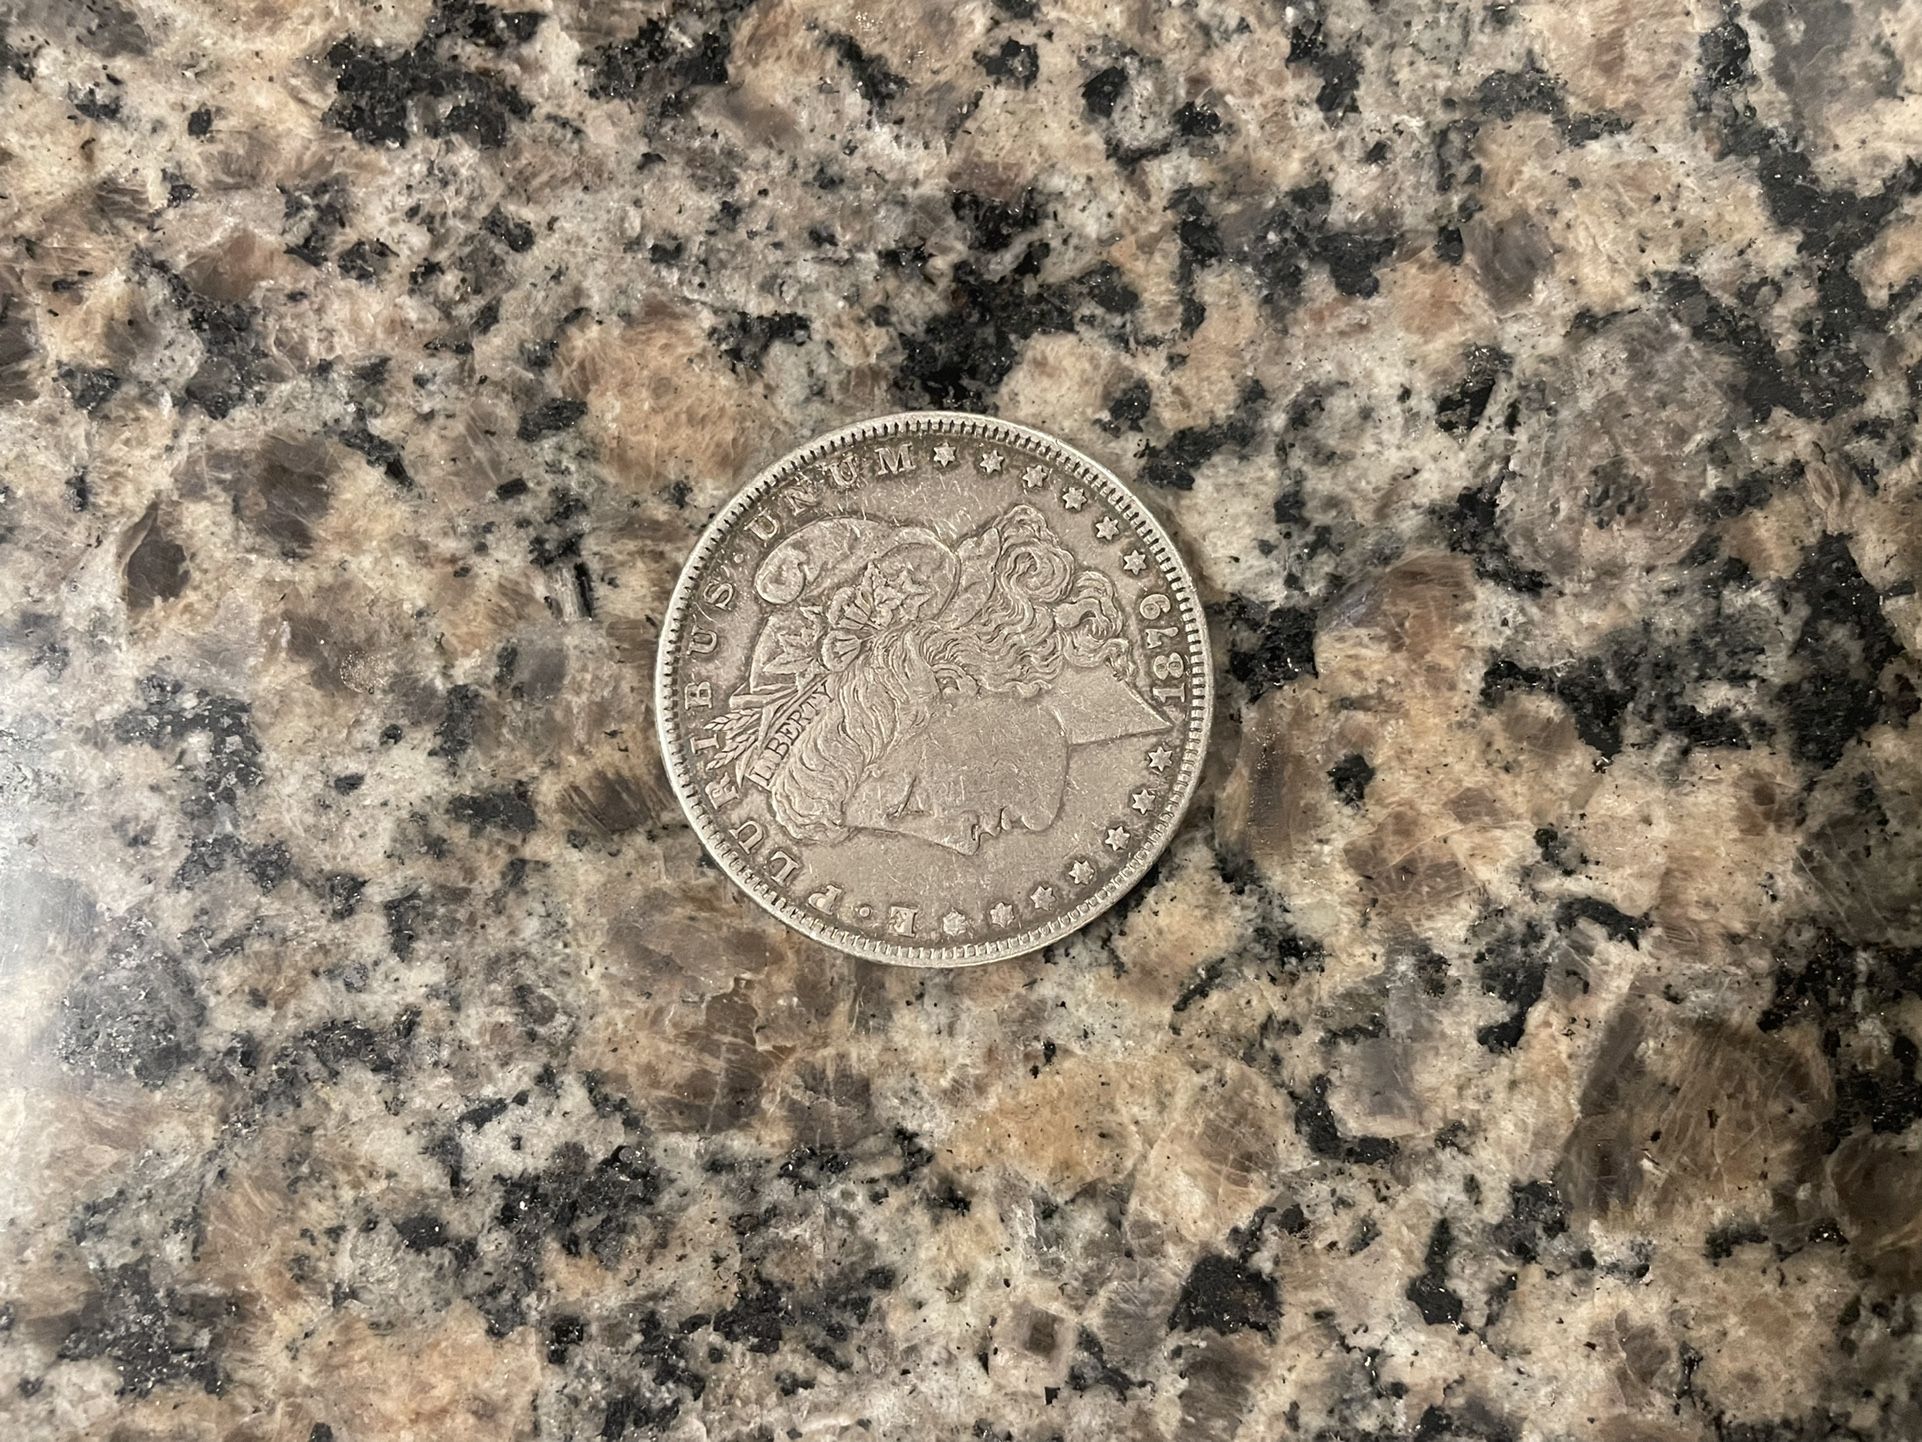 1879 Morgan Silver Dollar 